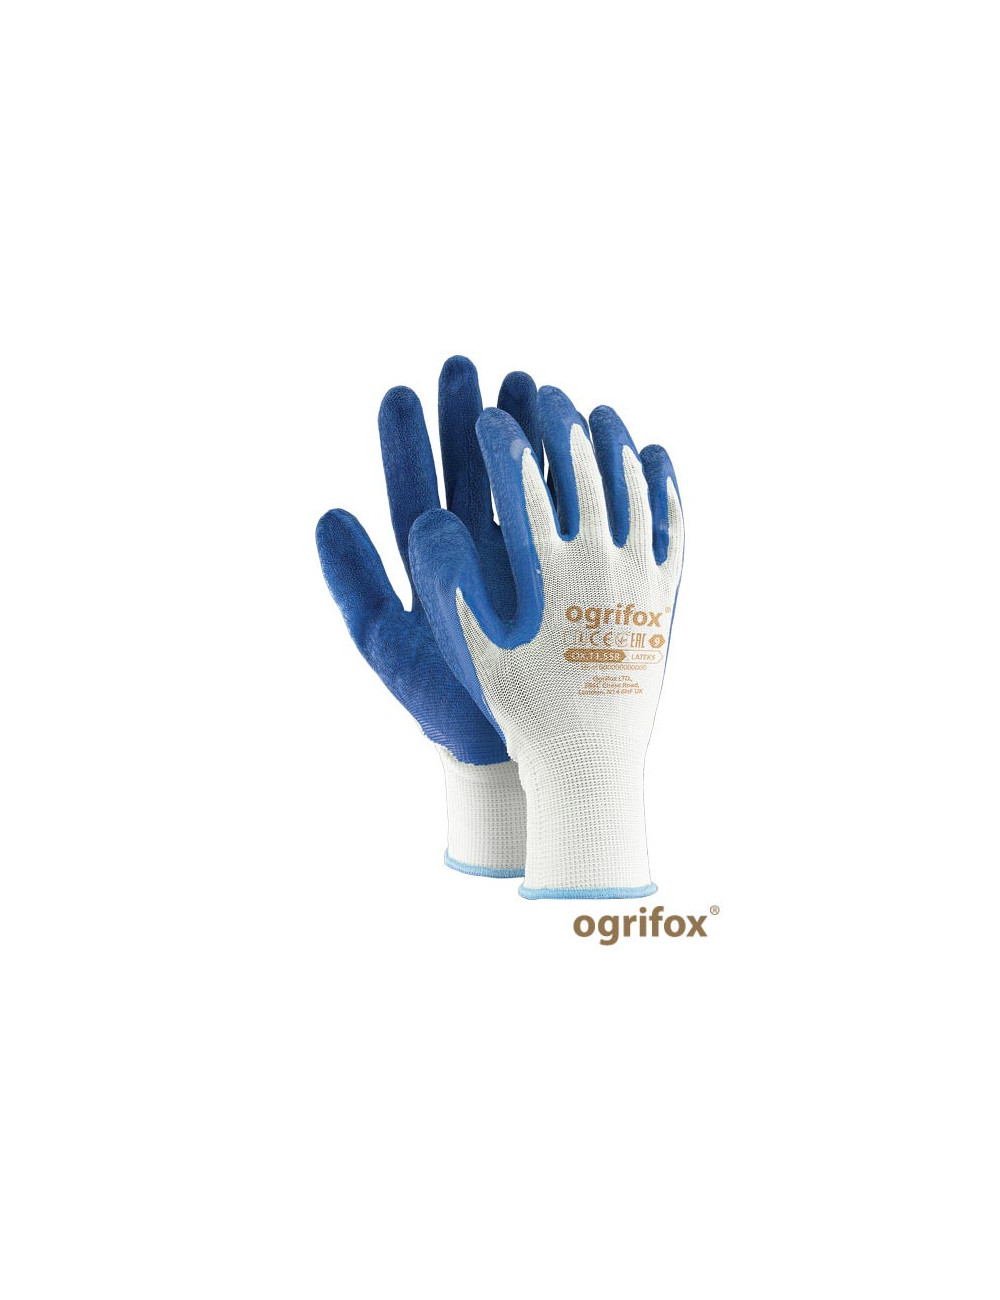 Gloves ox.11.558 latex ox-latex wn white-blue Ogrifox